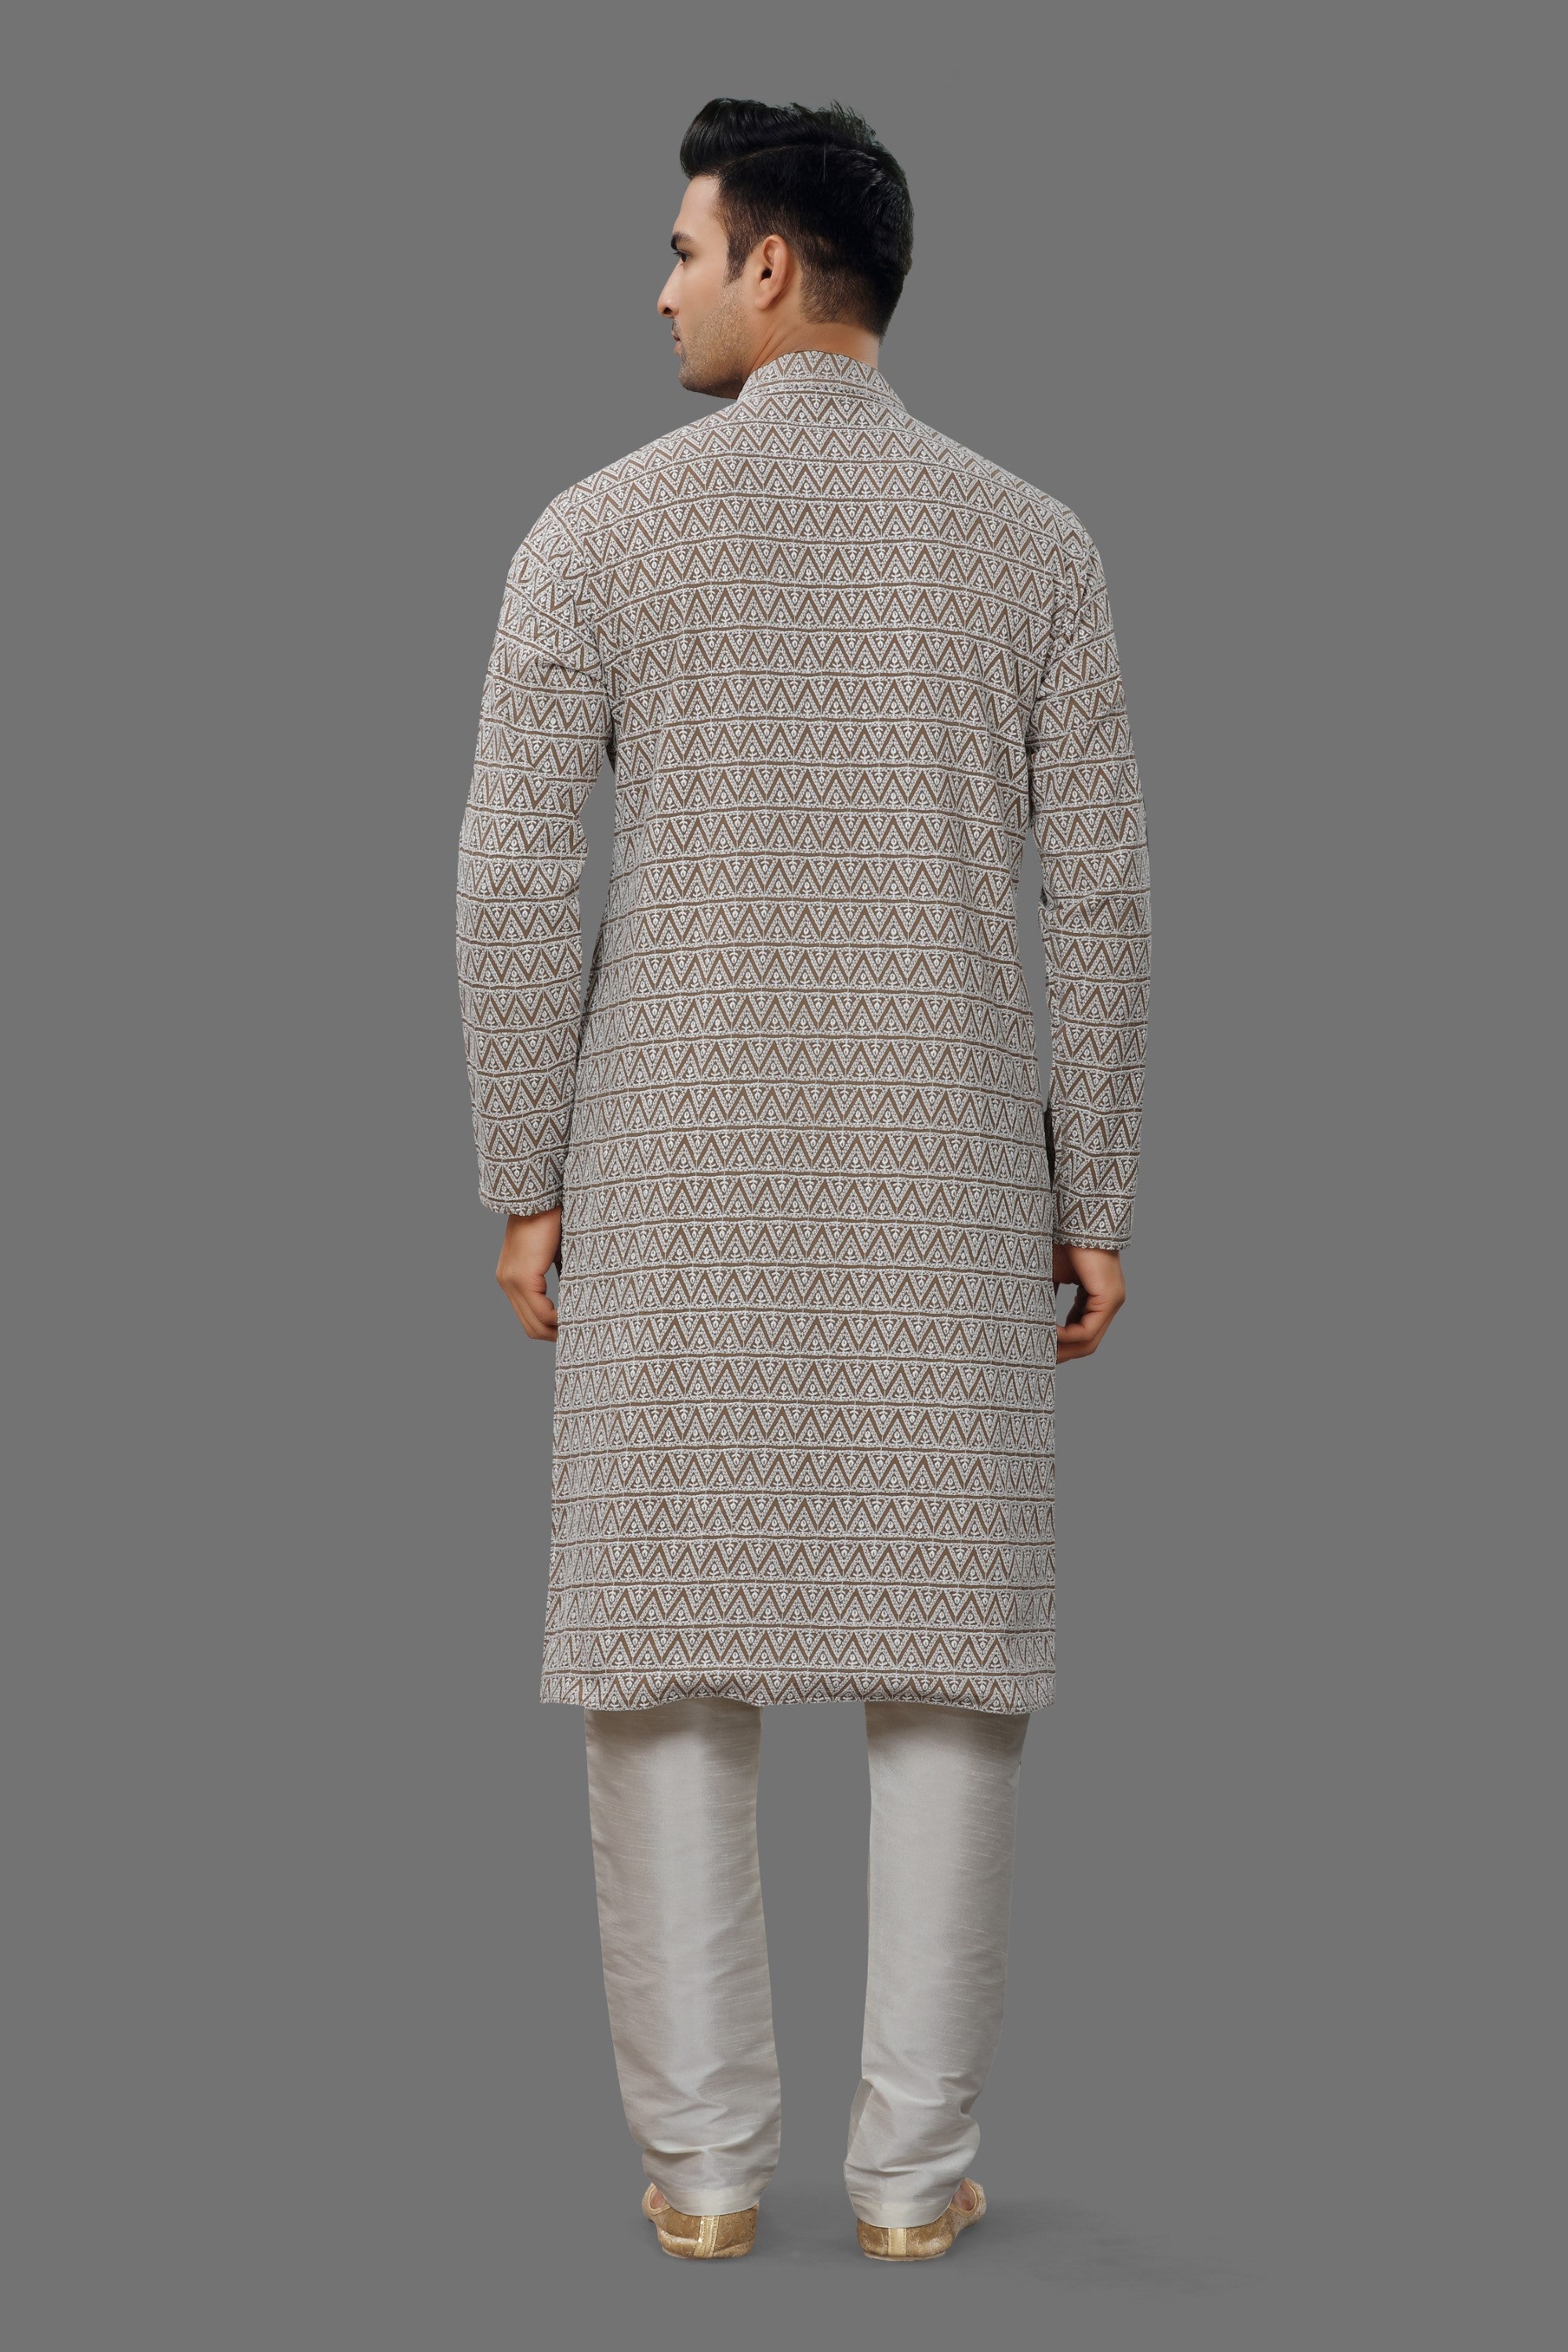 Men's Kurta Pajama Collection - Dwija Fashion Men